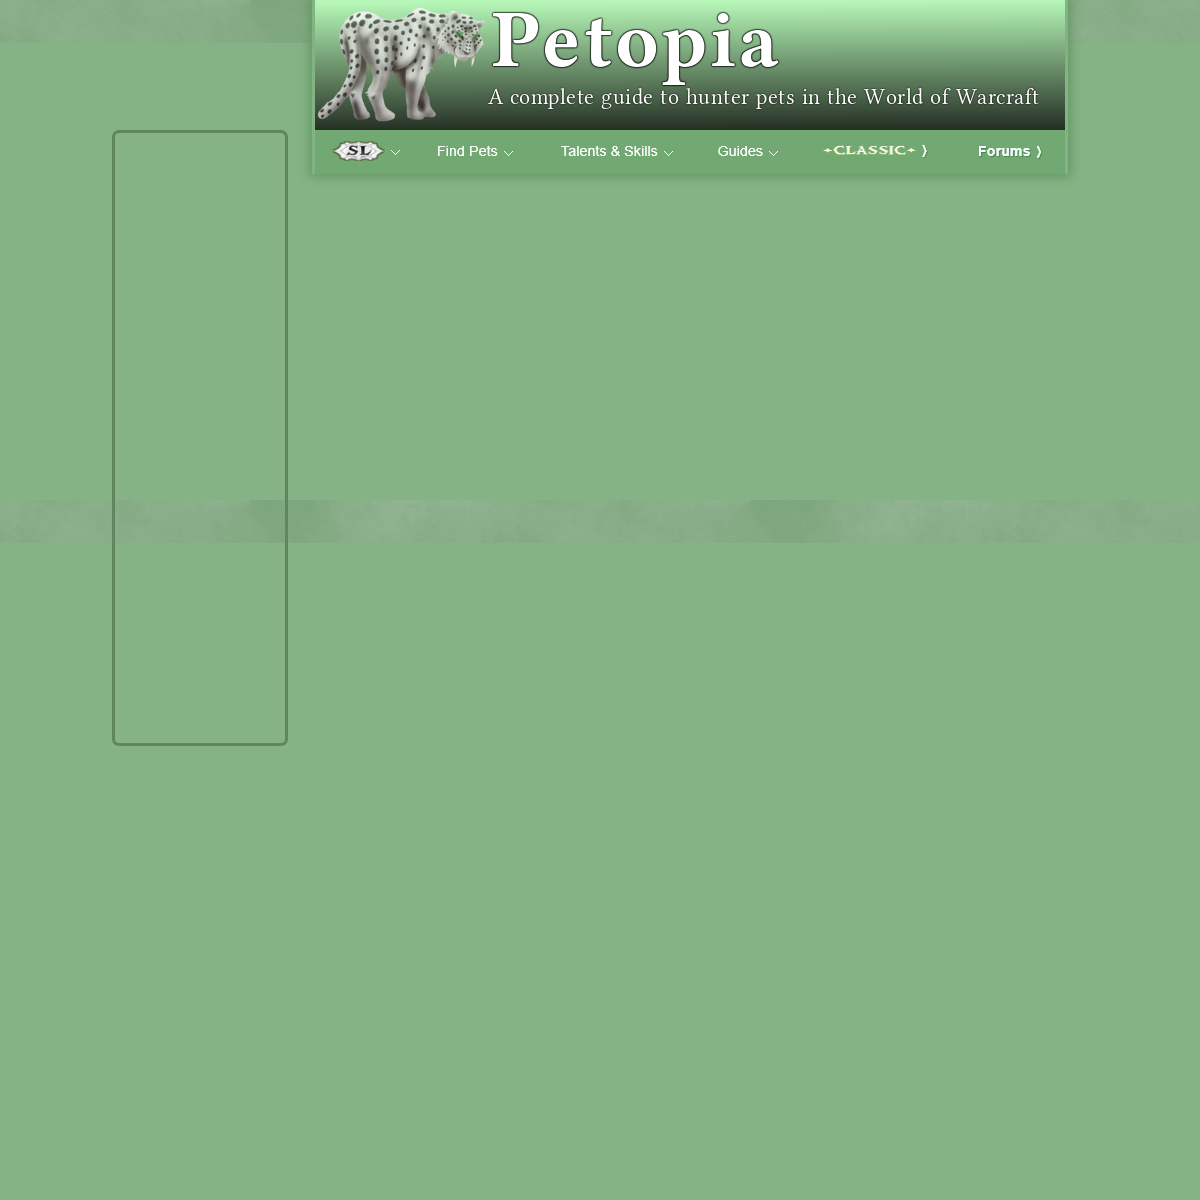 A complete backup of wow-petopia.com